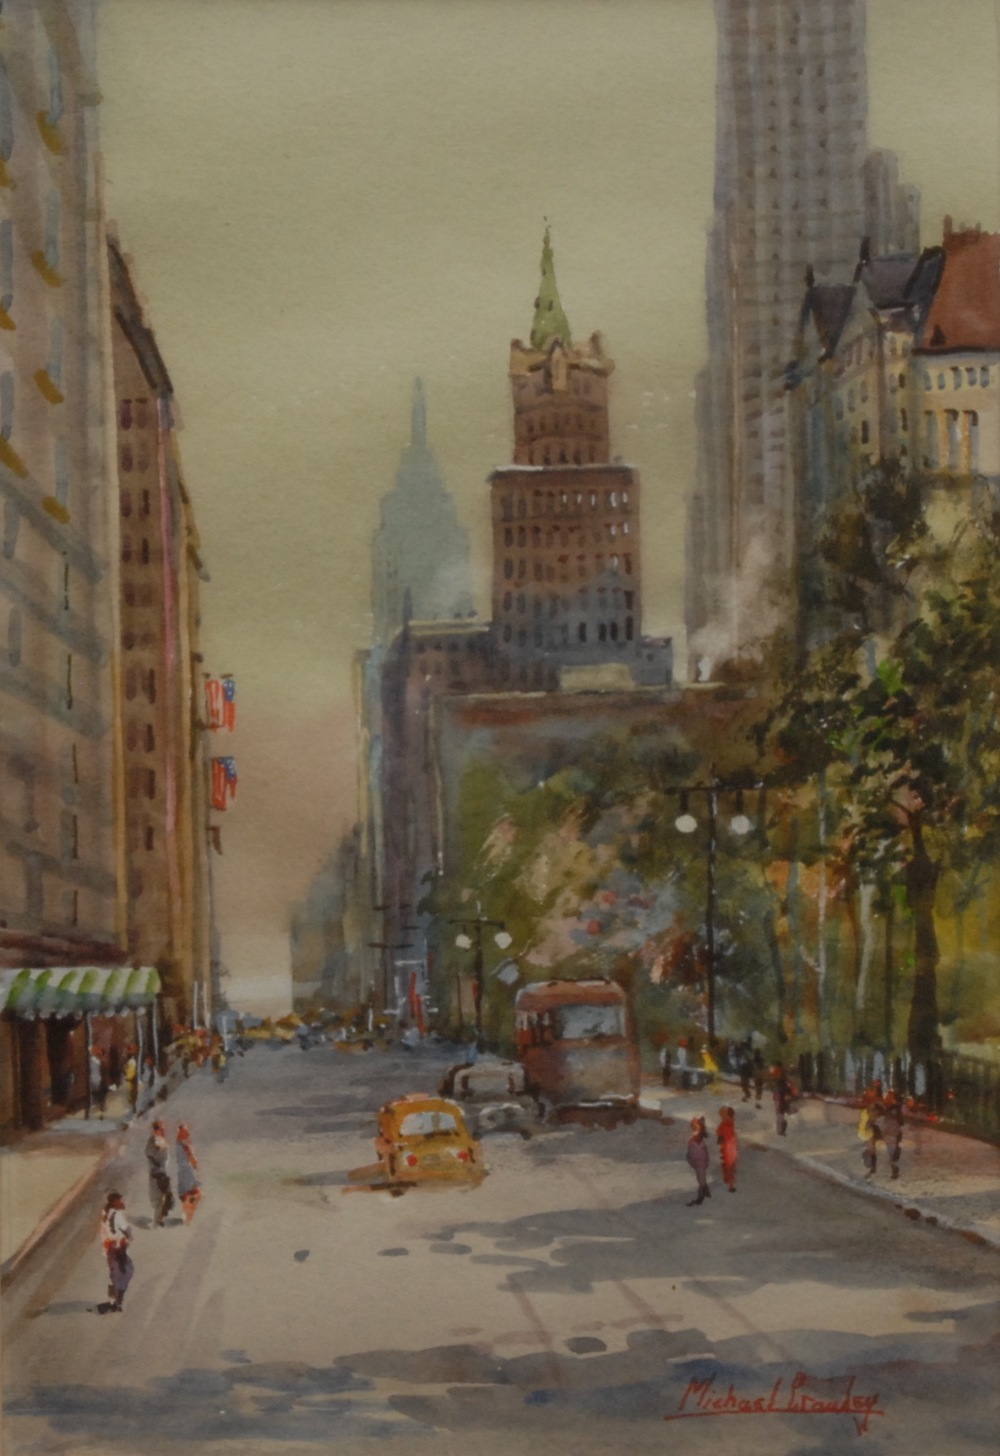 Michael Crawley
Fifth Avenue, 60th Street, New York
signed, watercolour, 30.5cm x 21cm